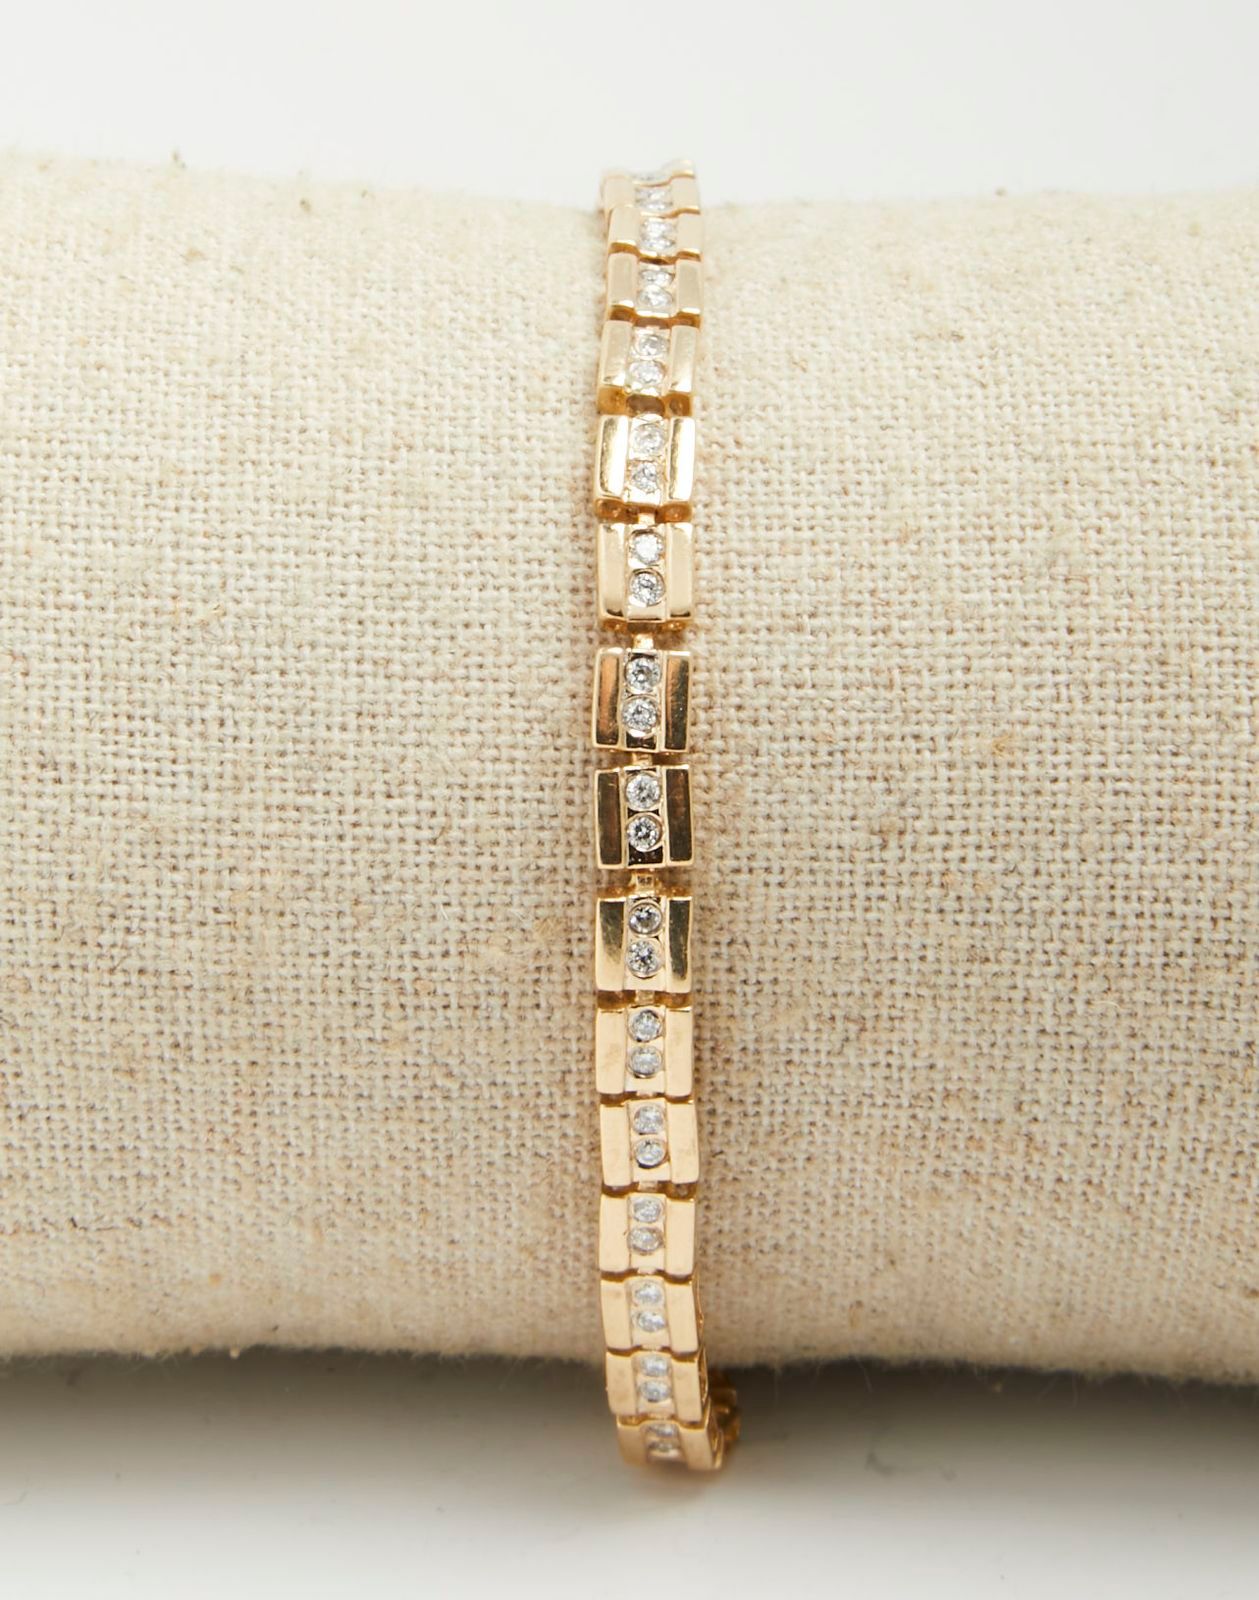 Null 324 Yellow gold river bracelet set with 65 brilliant cut diamonds, 19.5 cm
&hellip;